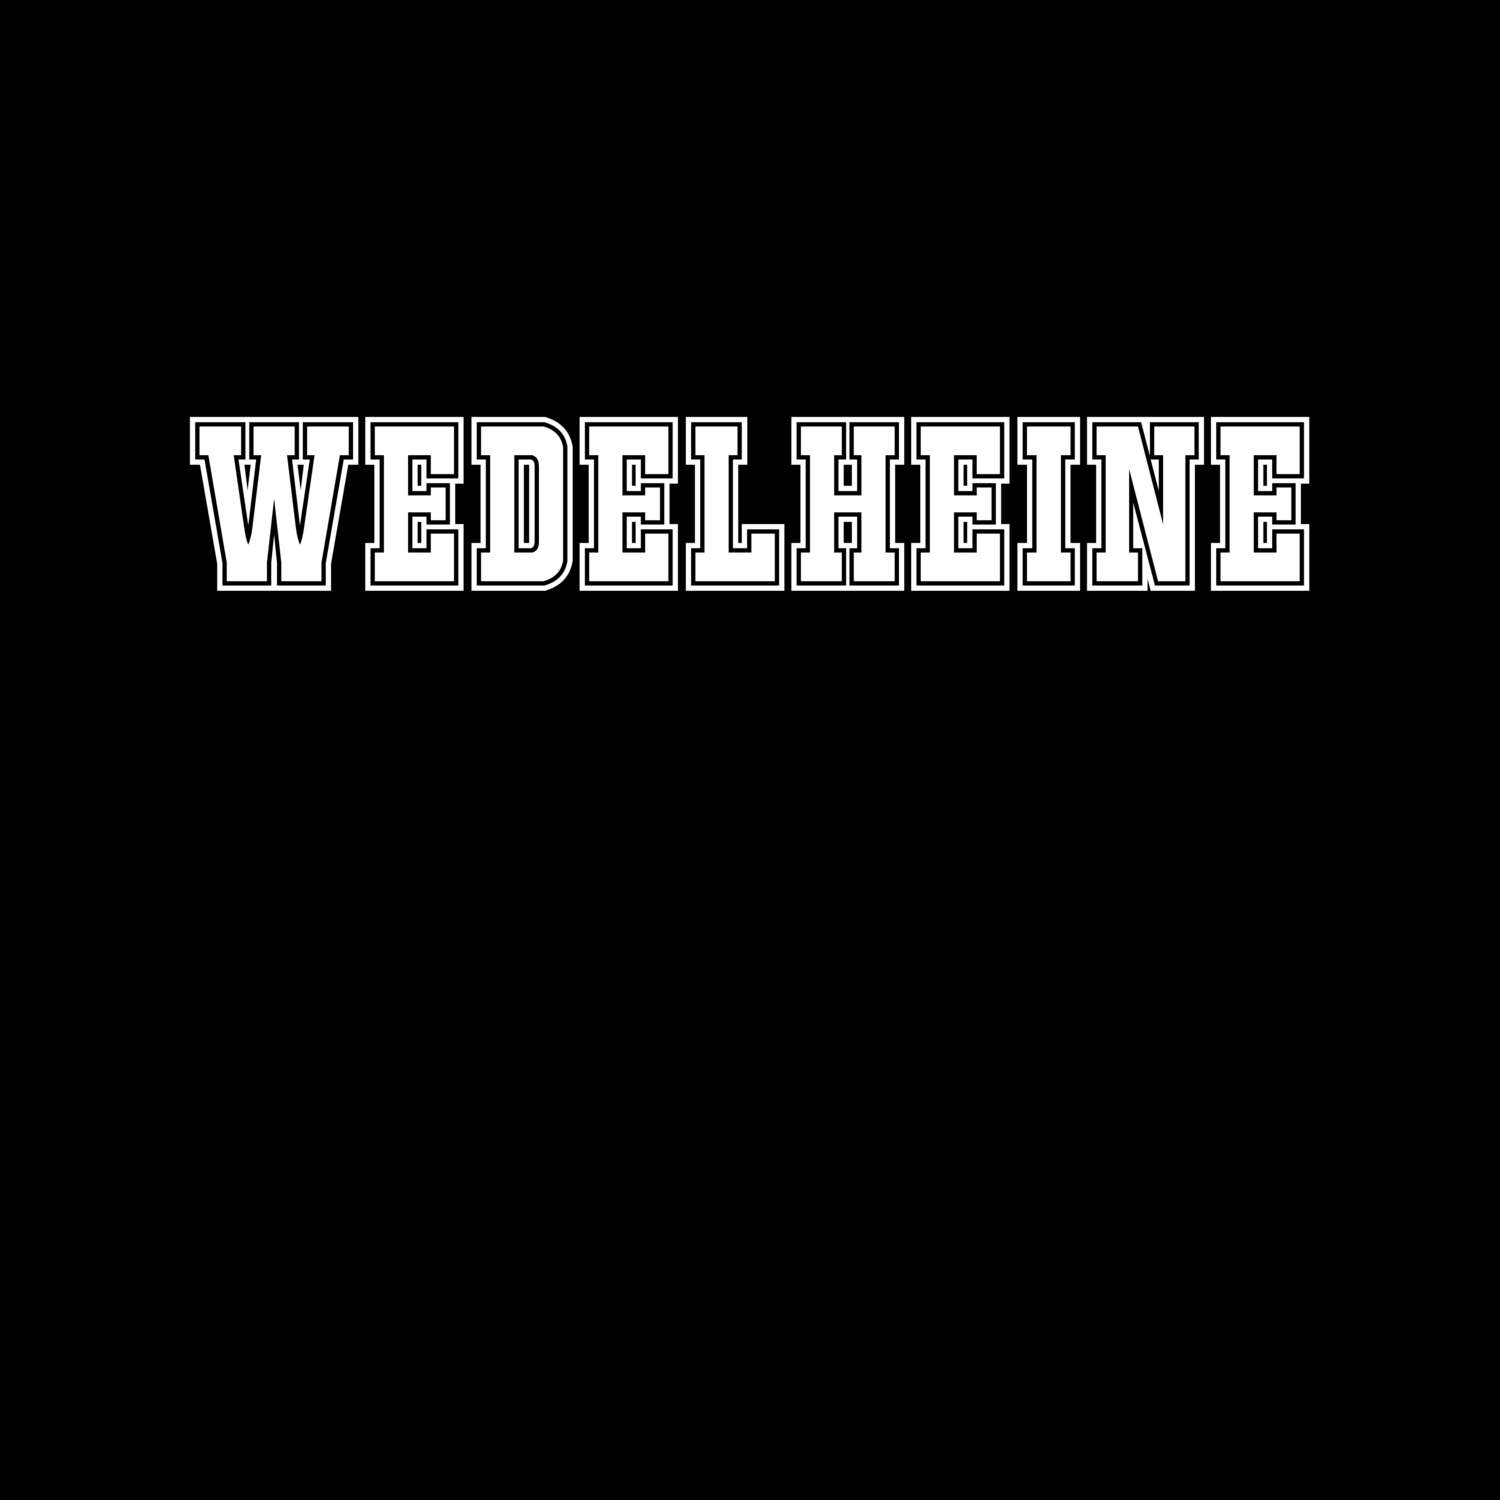 Wedelheine T-Shirt »Classic«